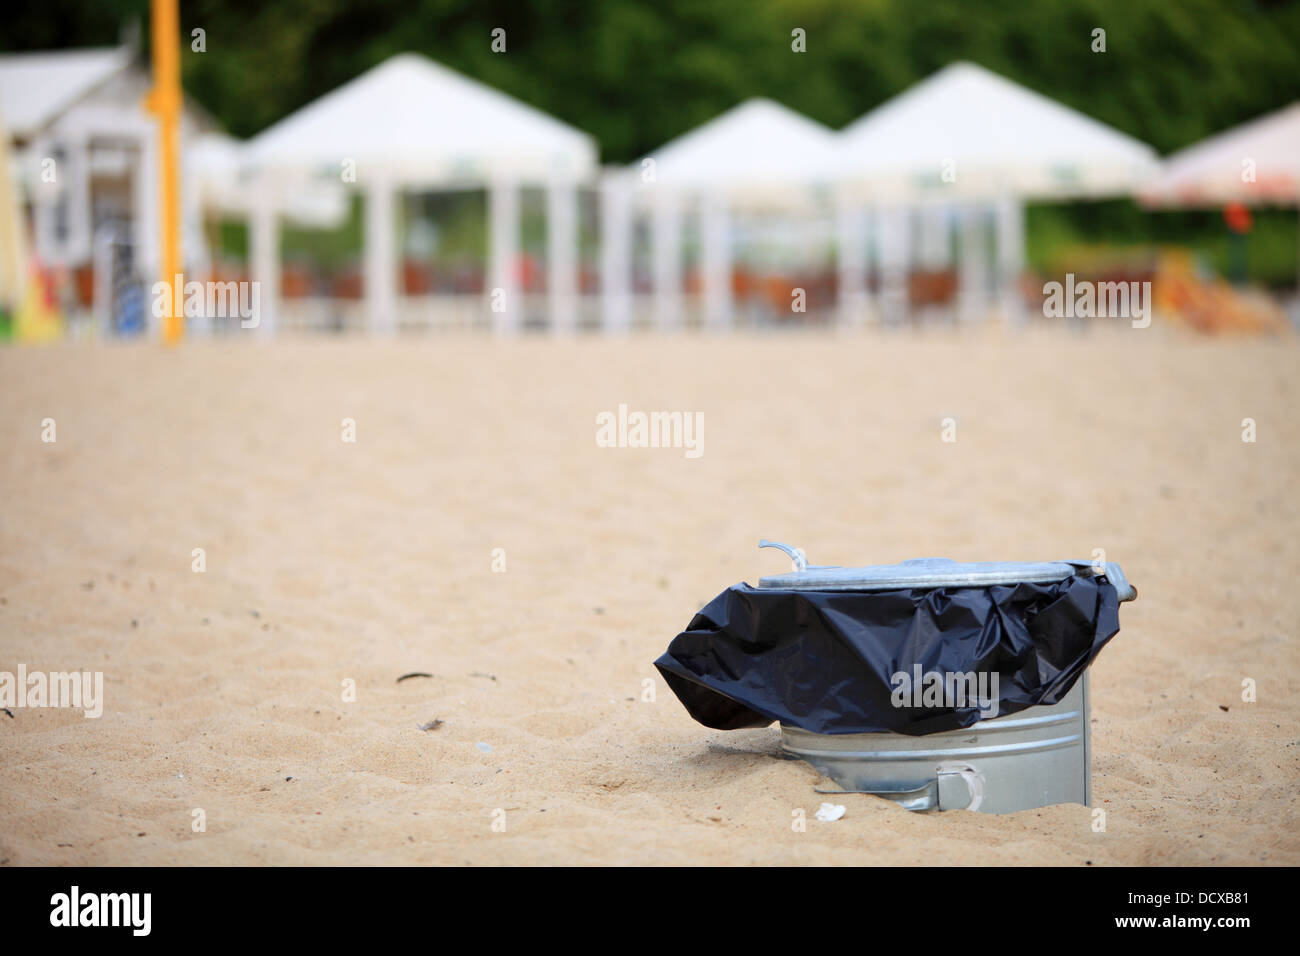 https://c8.alamy.com/comp/DCXB81/gray-metal-garbage-bin-or-trash-can-with-a-plastic-bag-inside-beach-DCXB81.jpg